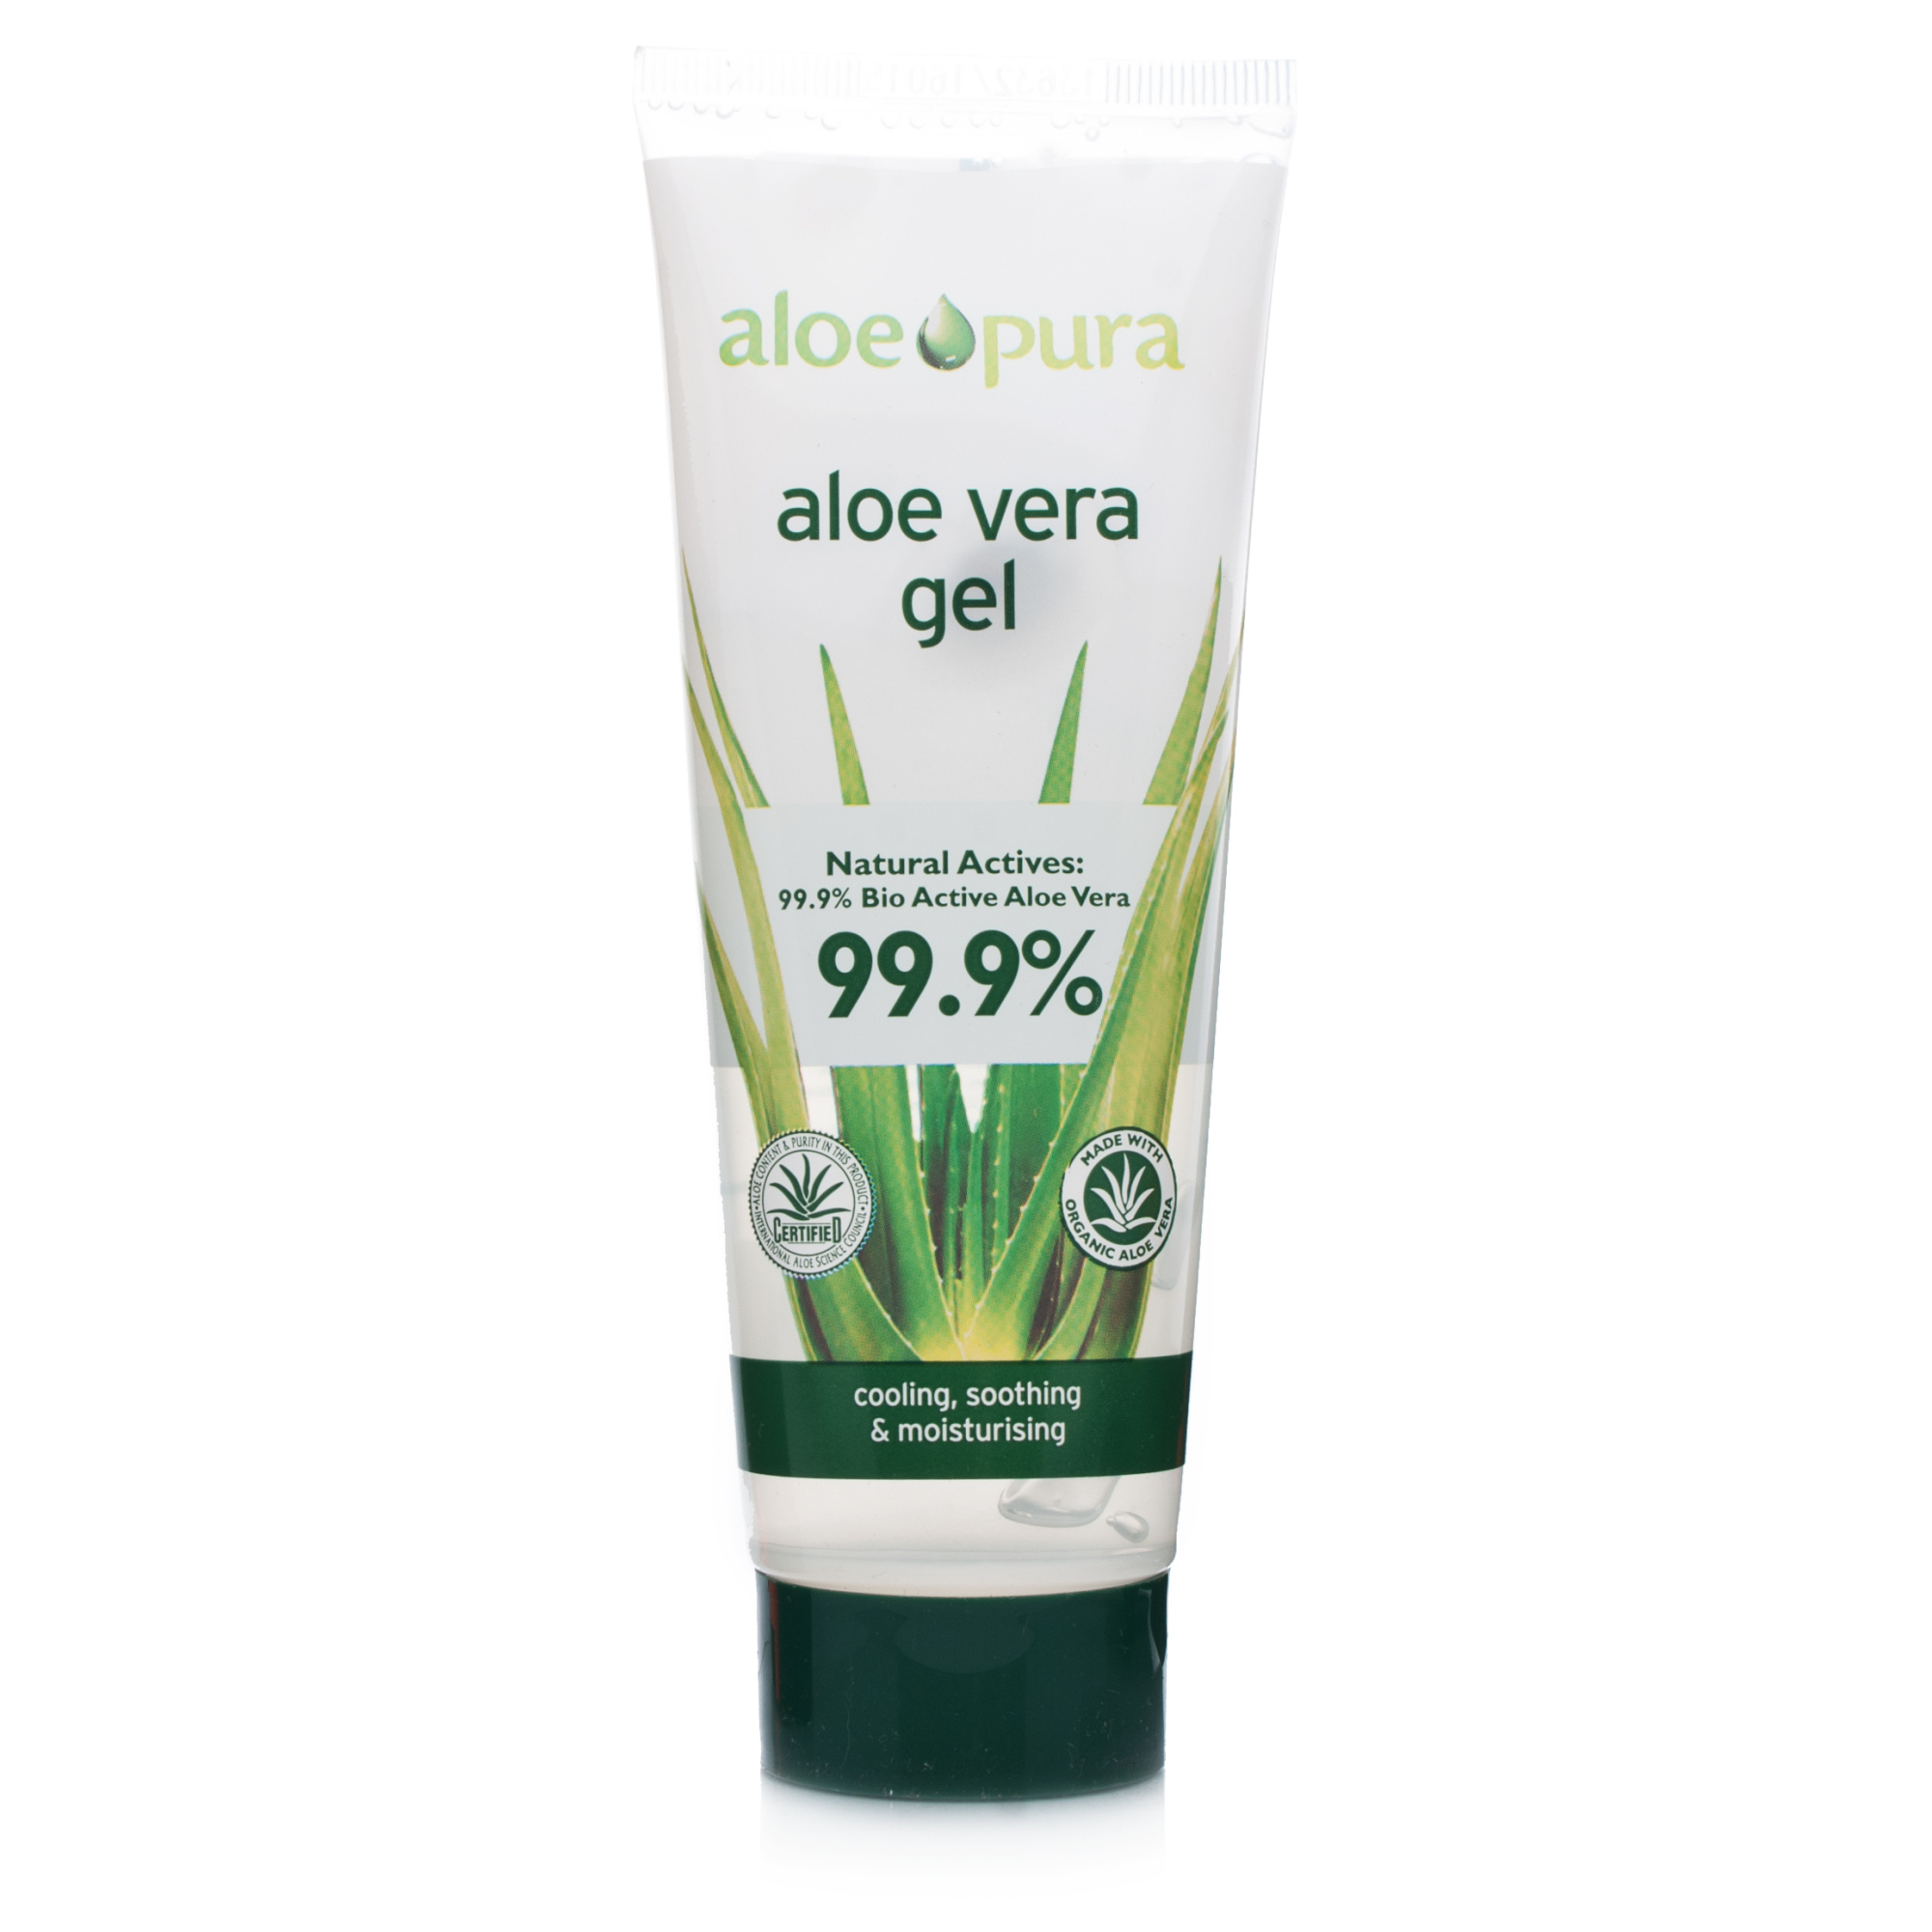 Aloe Pura Aloe Vera Gel  Bio Active Health Treatment product reviews 